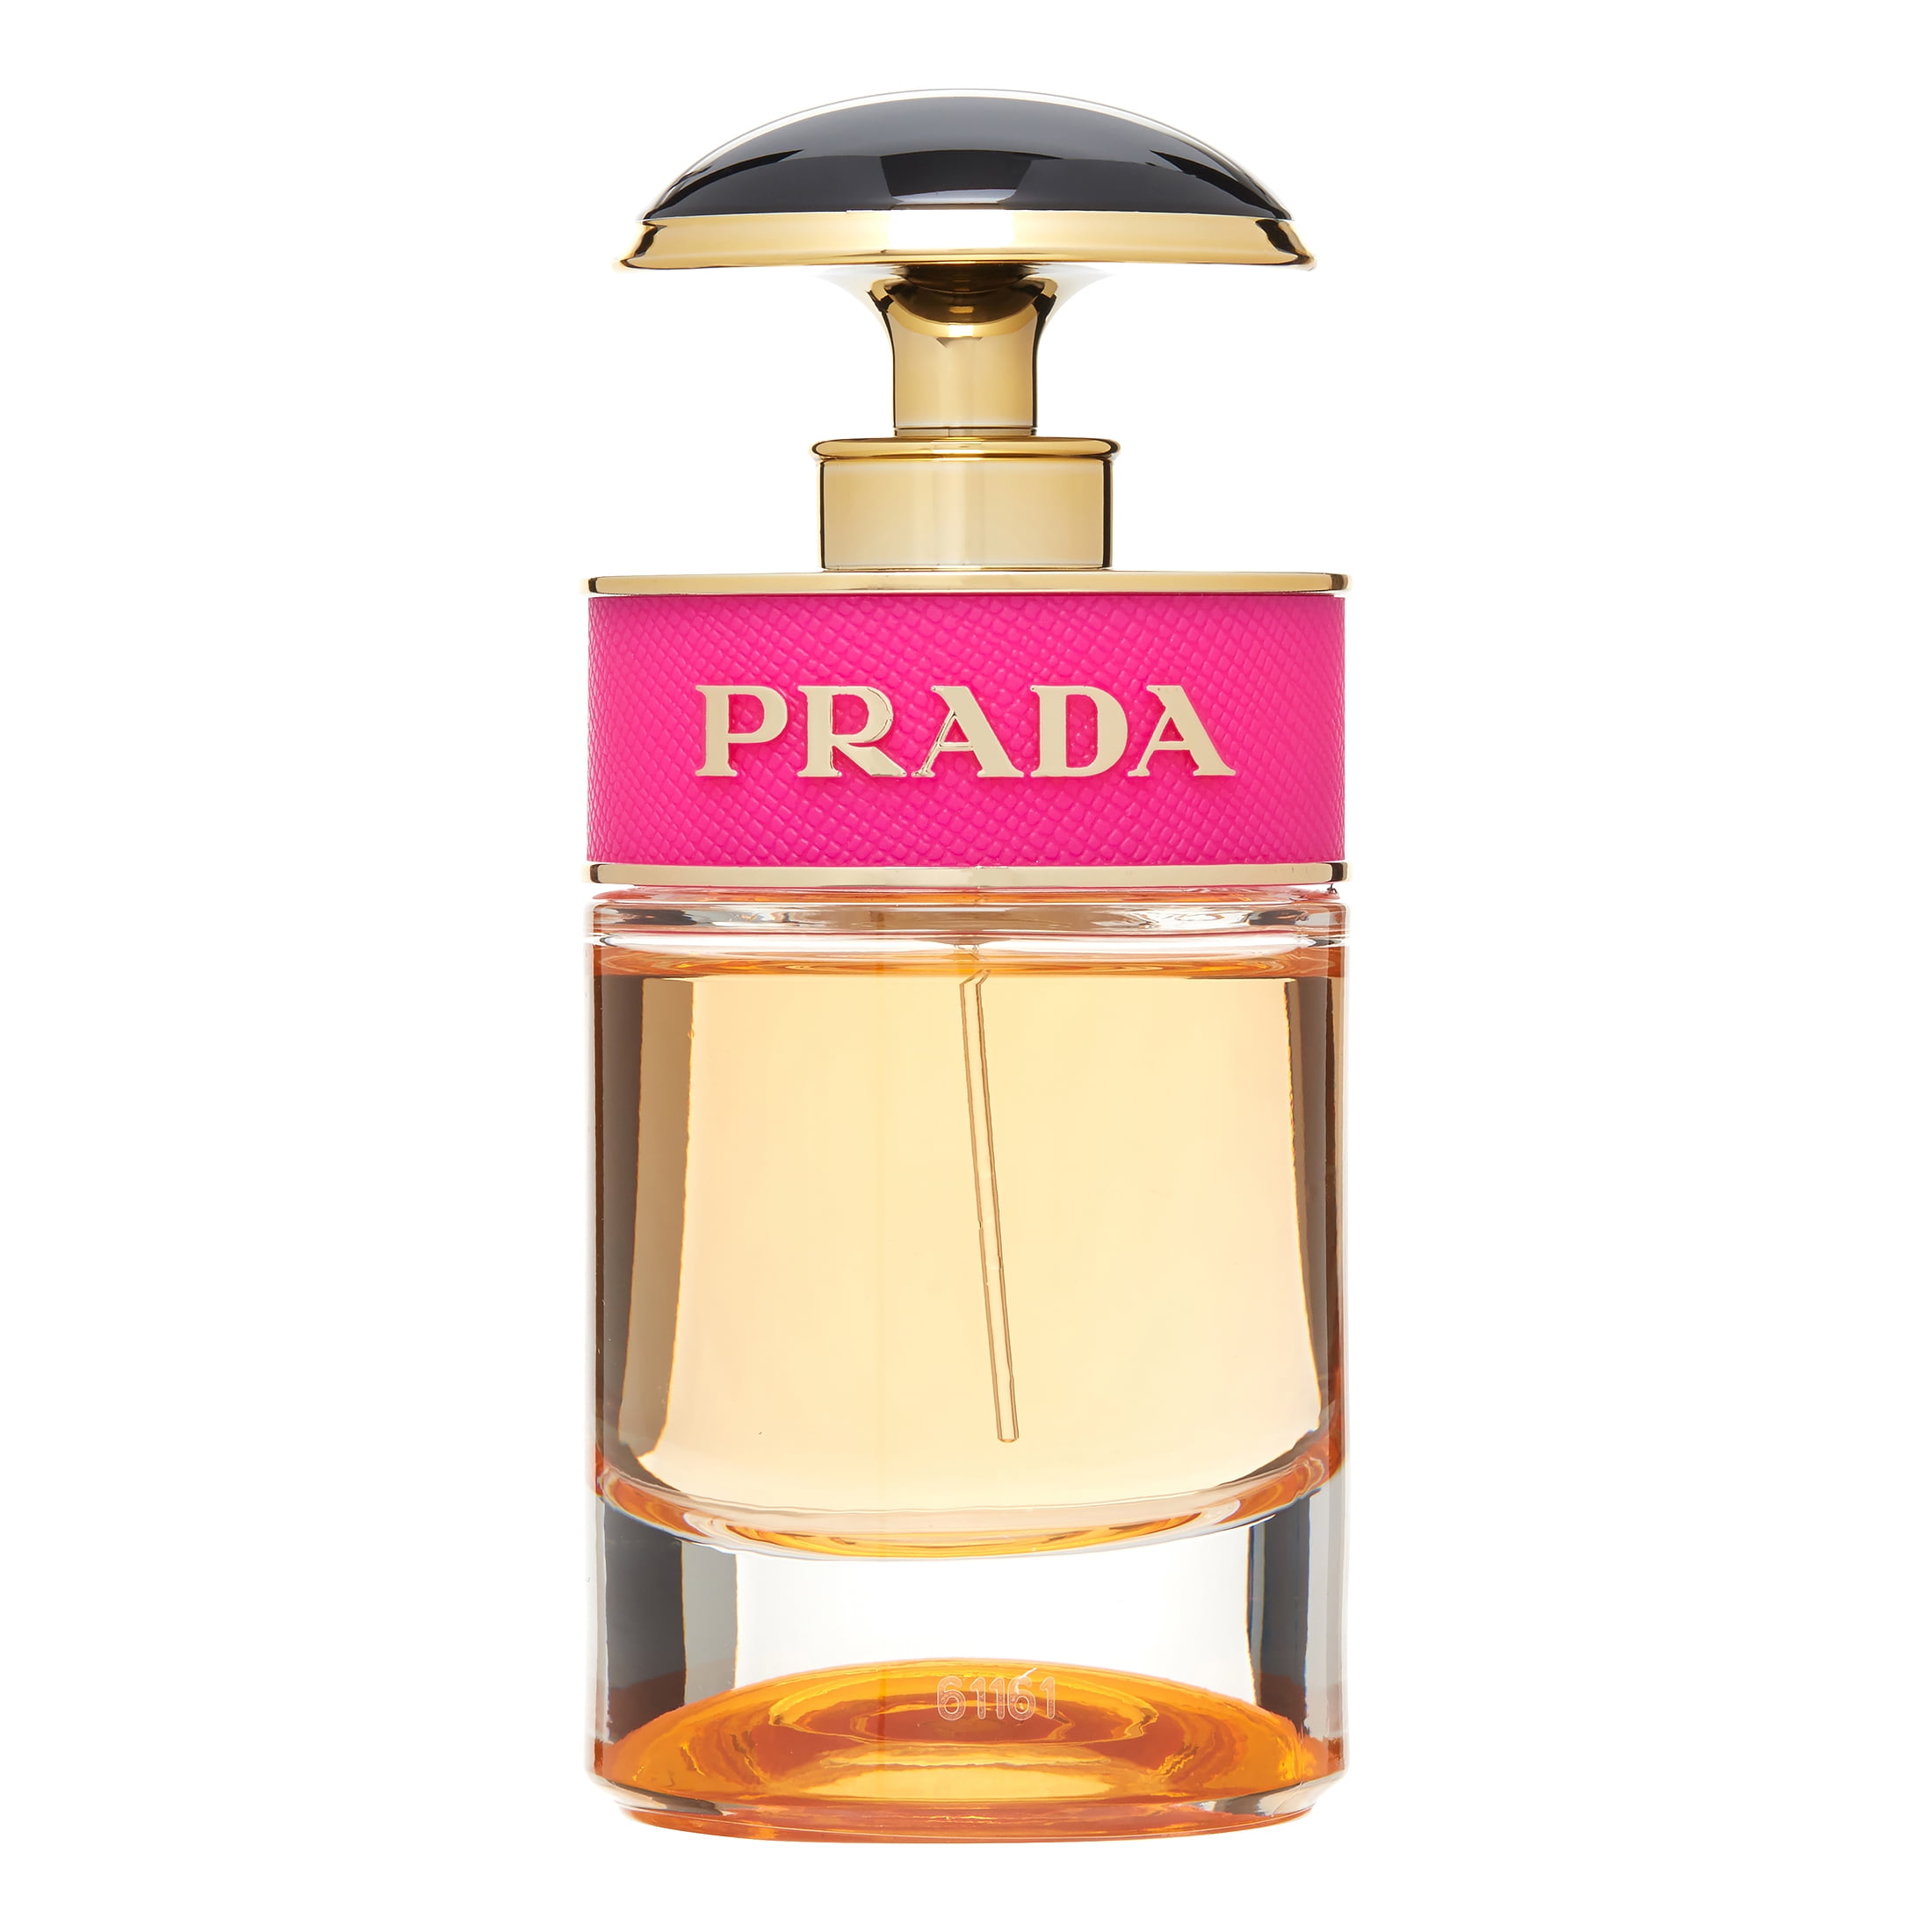 prada cotton candy perfume